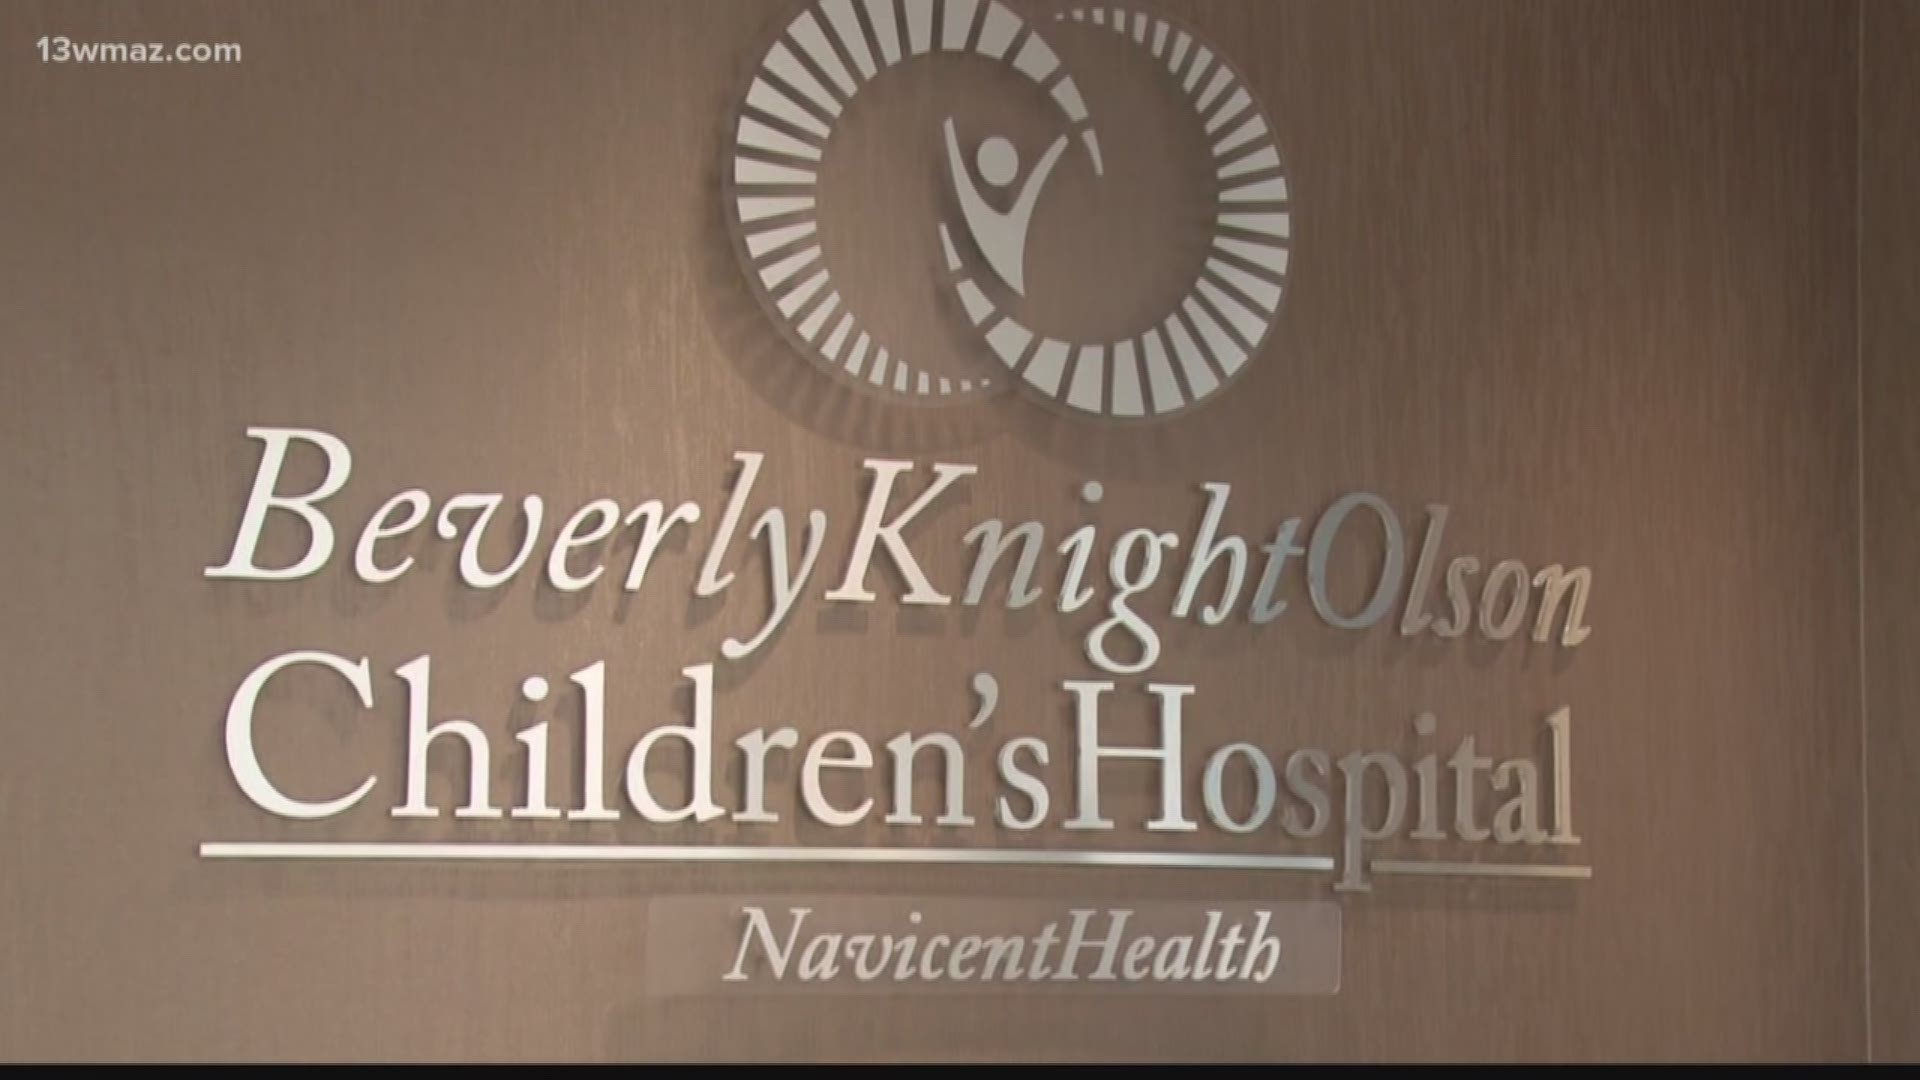 Sneak peek of Navicent's Children's Hospital